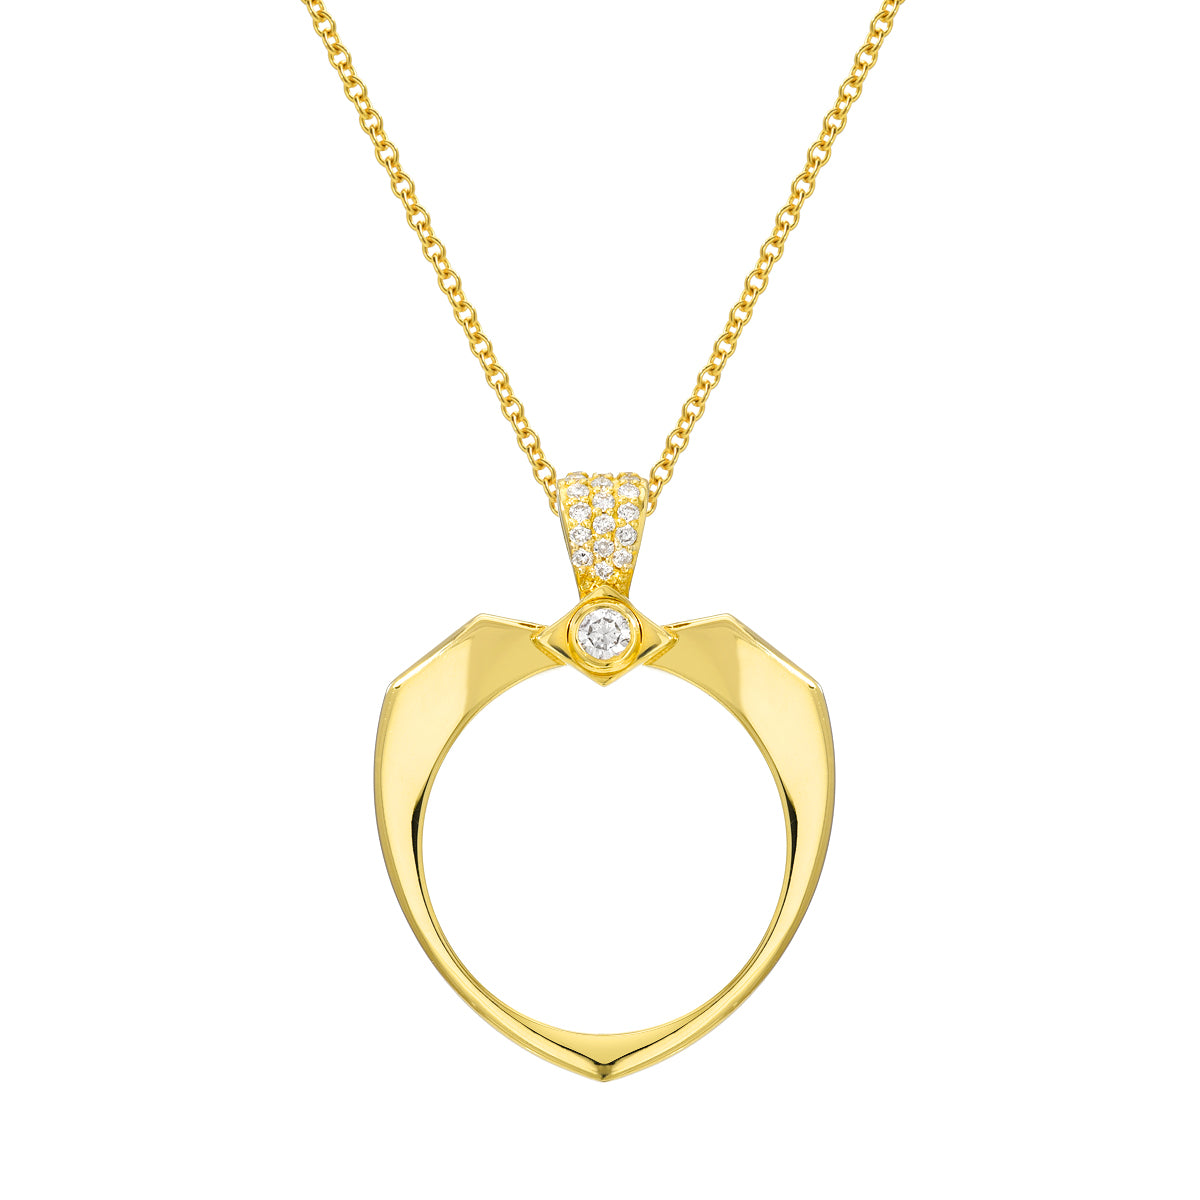 Gold Heart Pendant Necklace